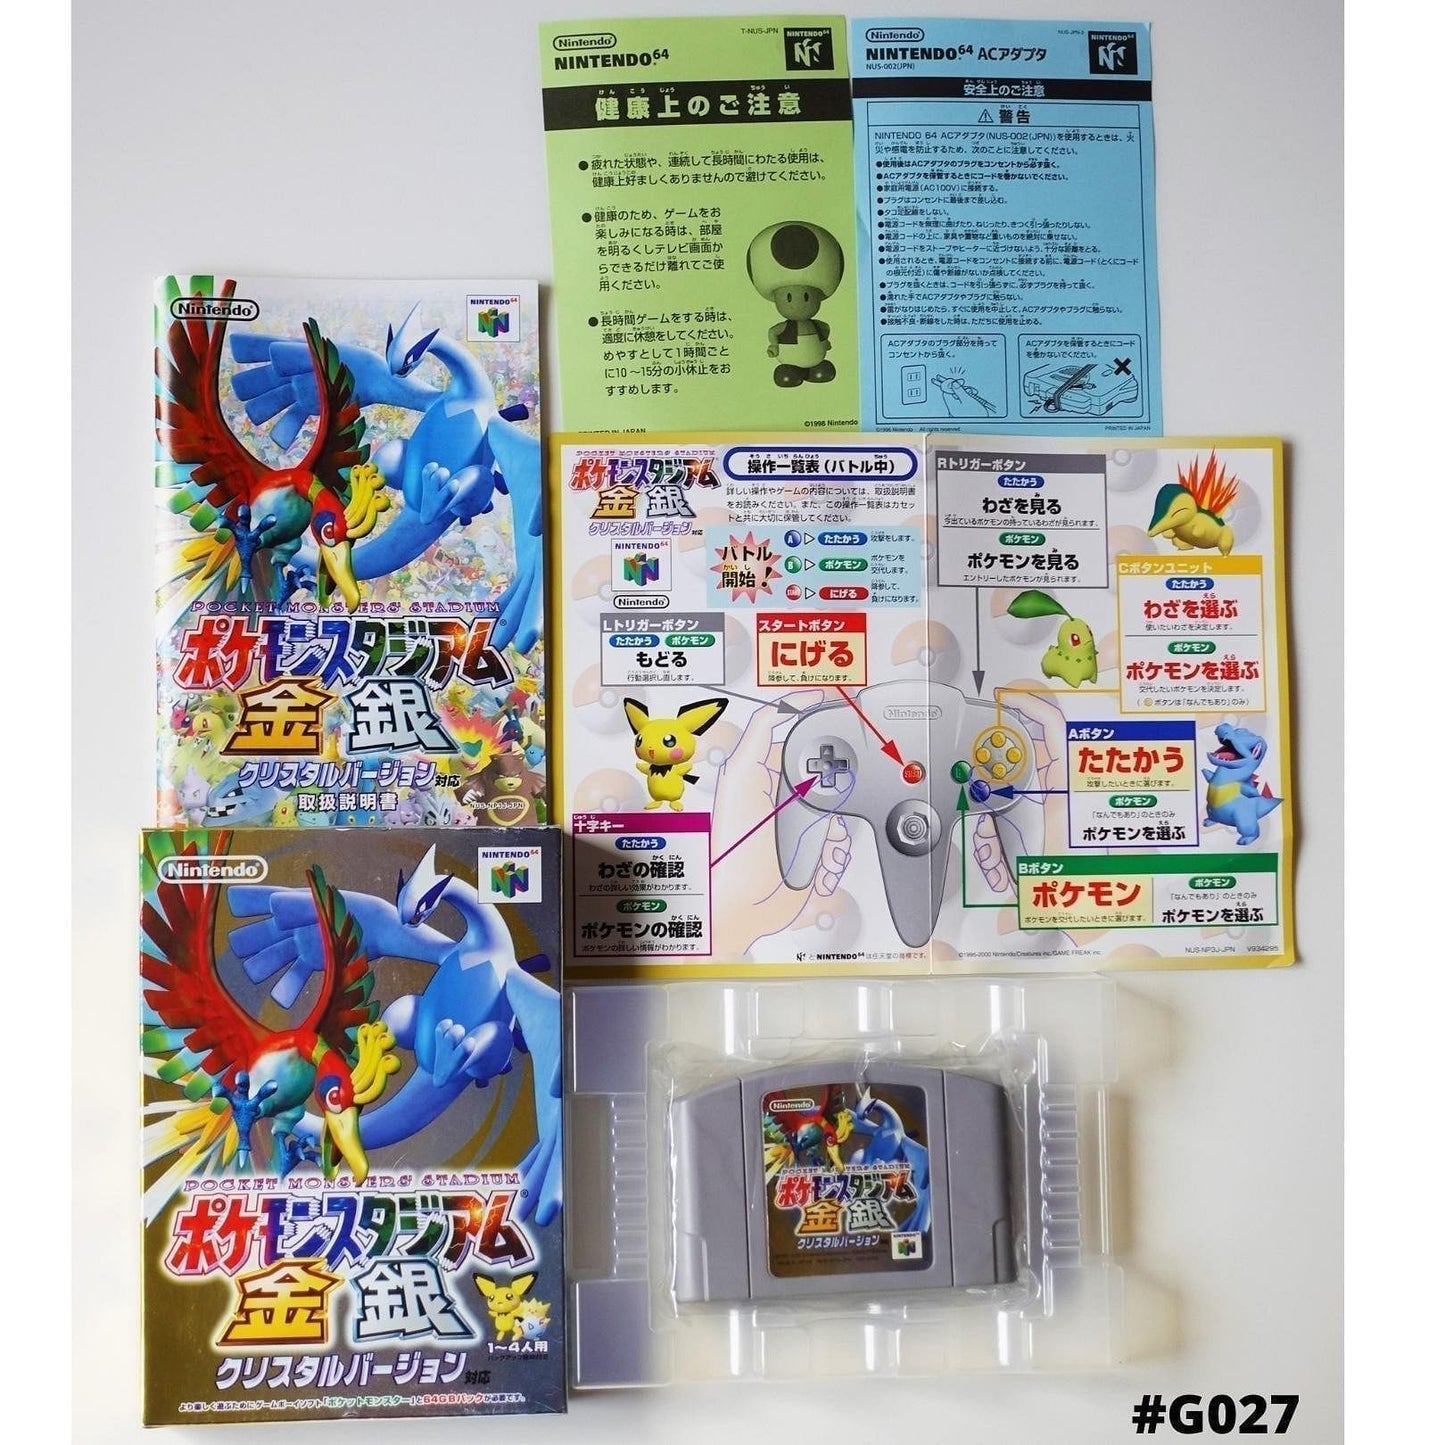 Pokémon Stadium Gold and Silver | nintendo64 ChitoroShop